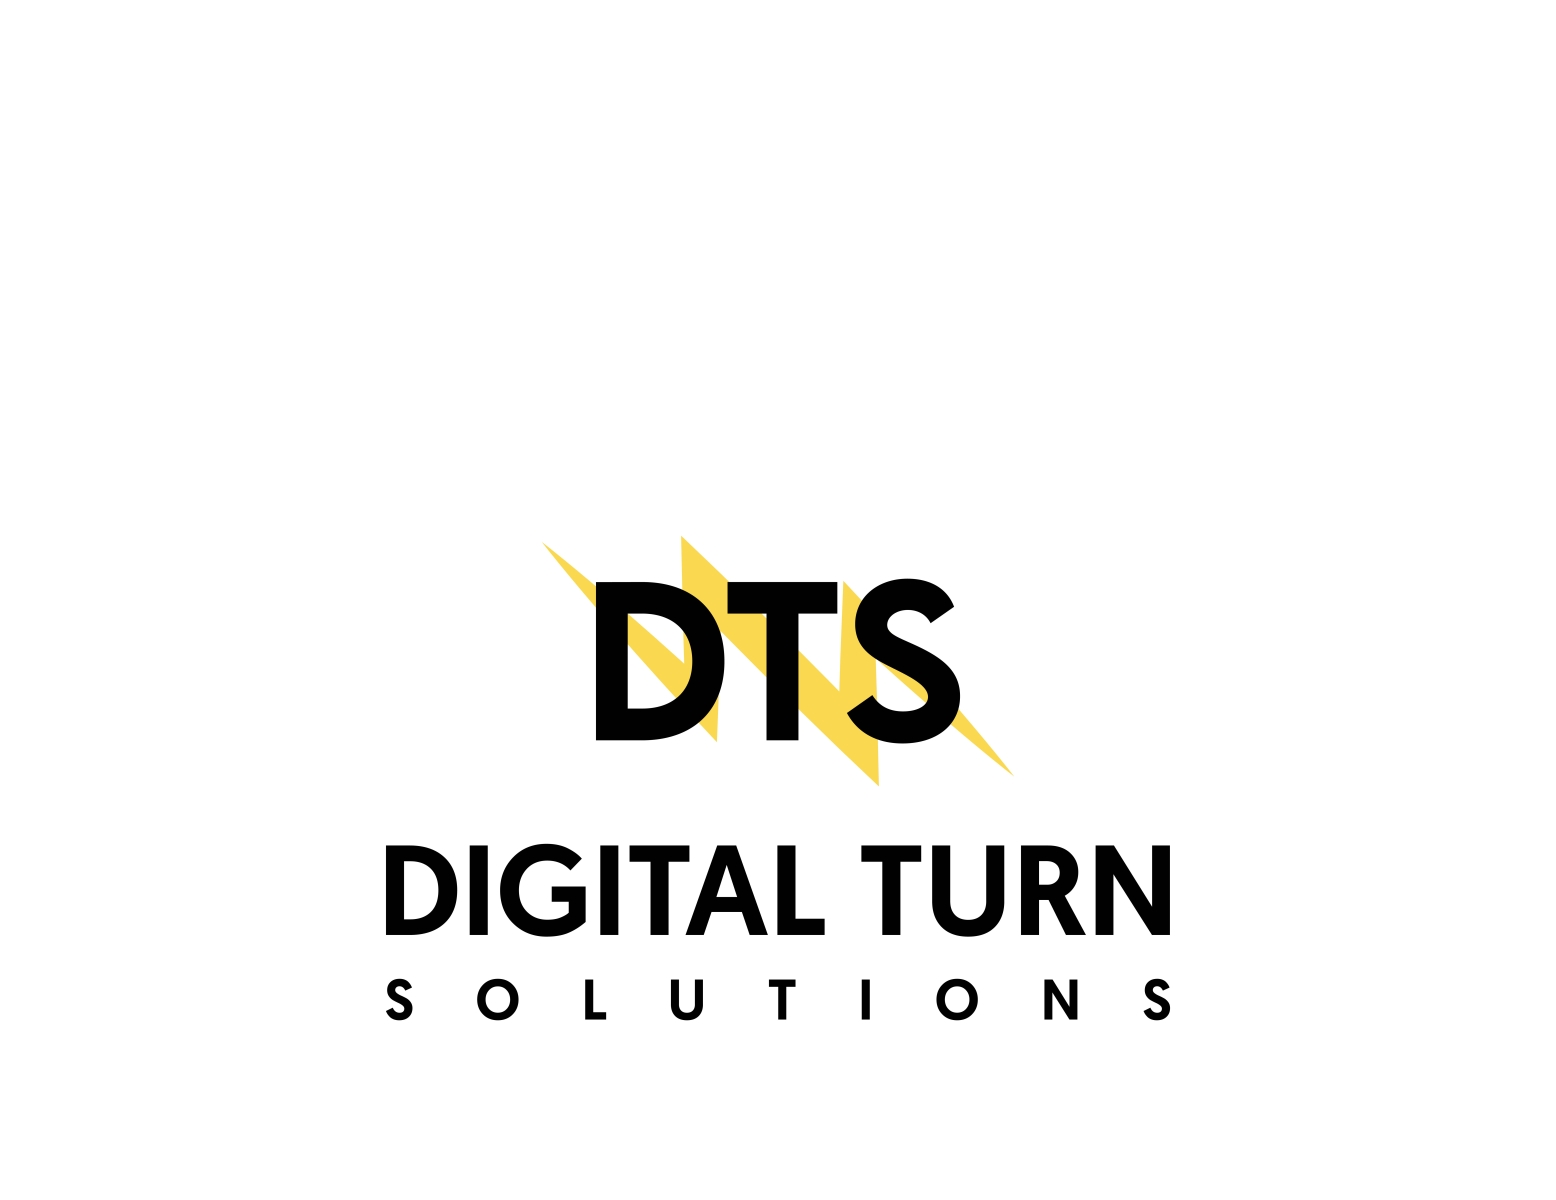 DTS Digital Surround | Logopedia | Fandom